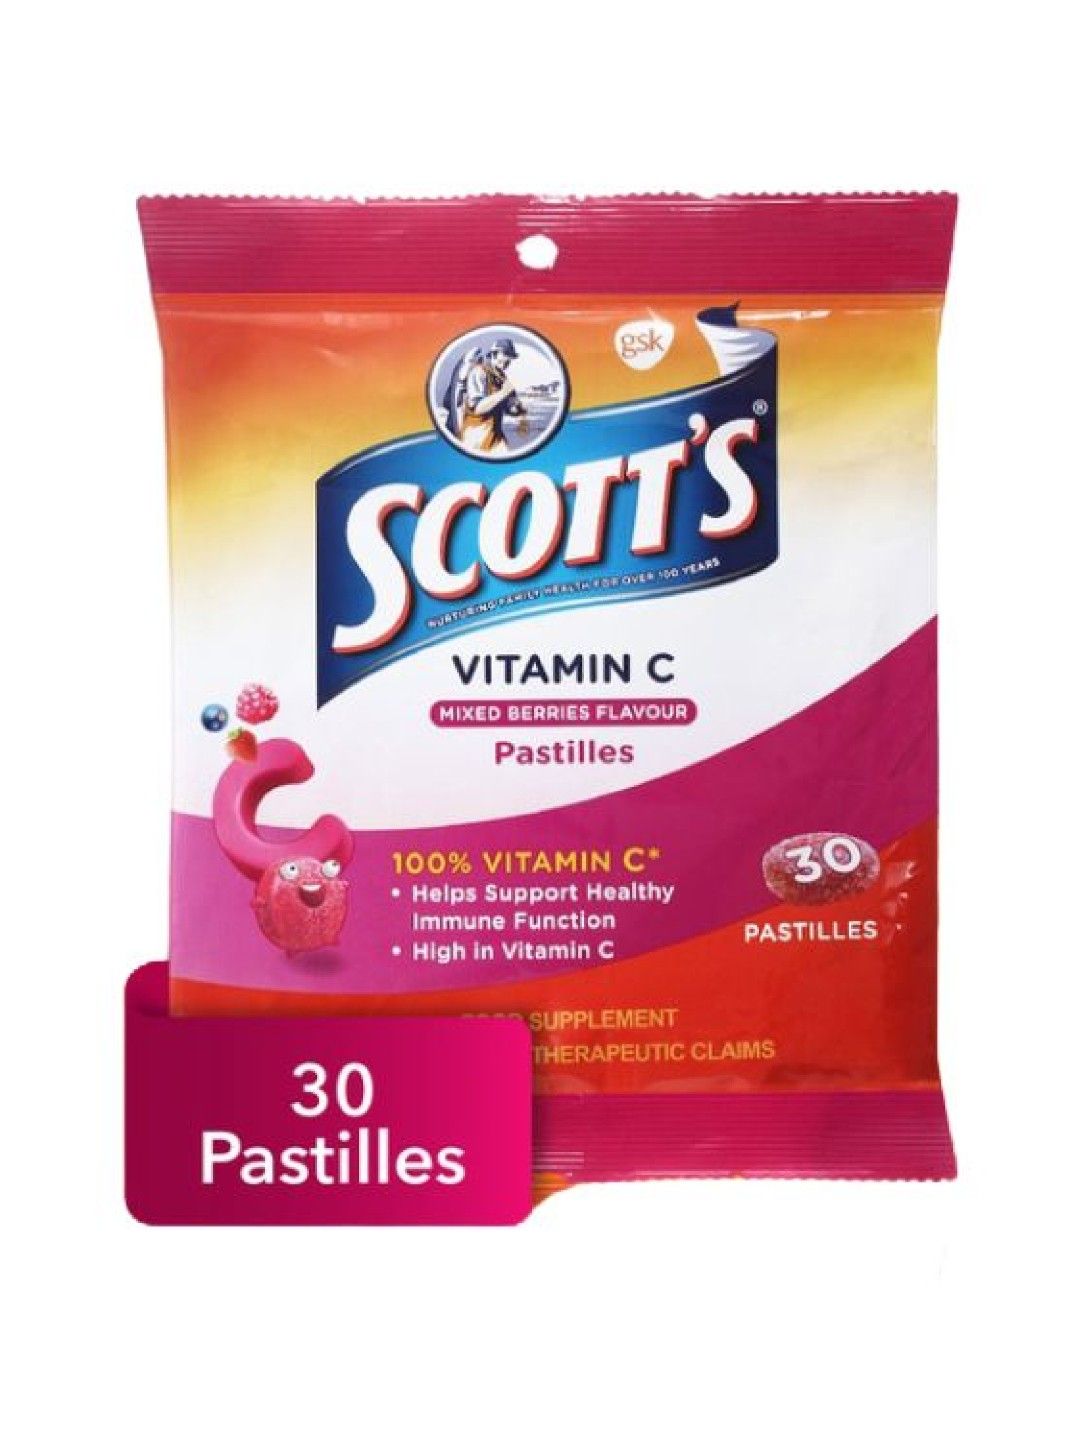 Scott's Vitamin C Pastilles Mixed Berries Flavour 30s